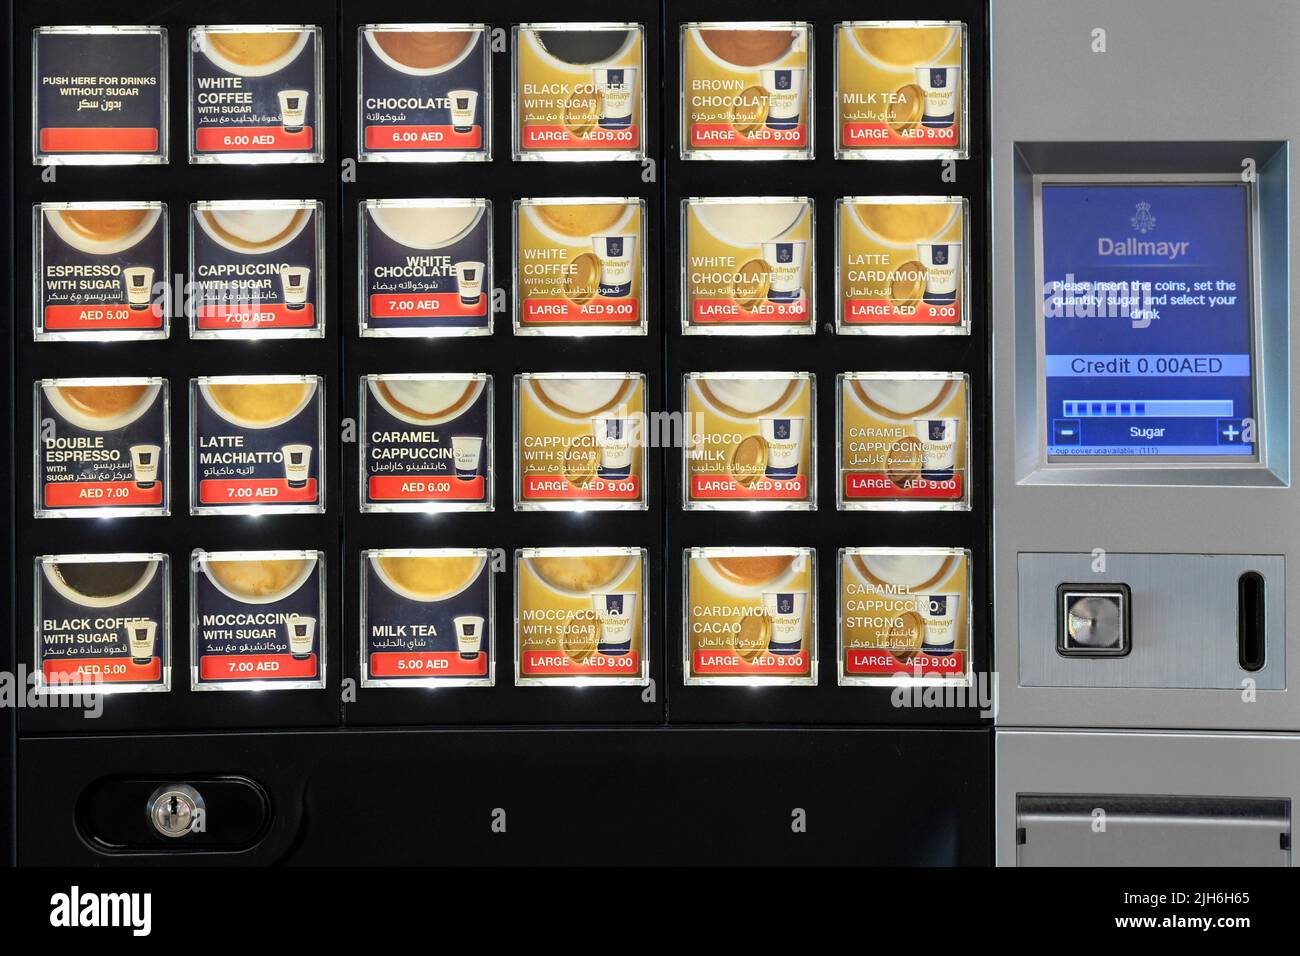 Instant Coffee Vending Machines [Buy/Rent] - Dallmayr